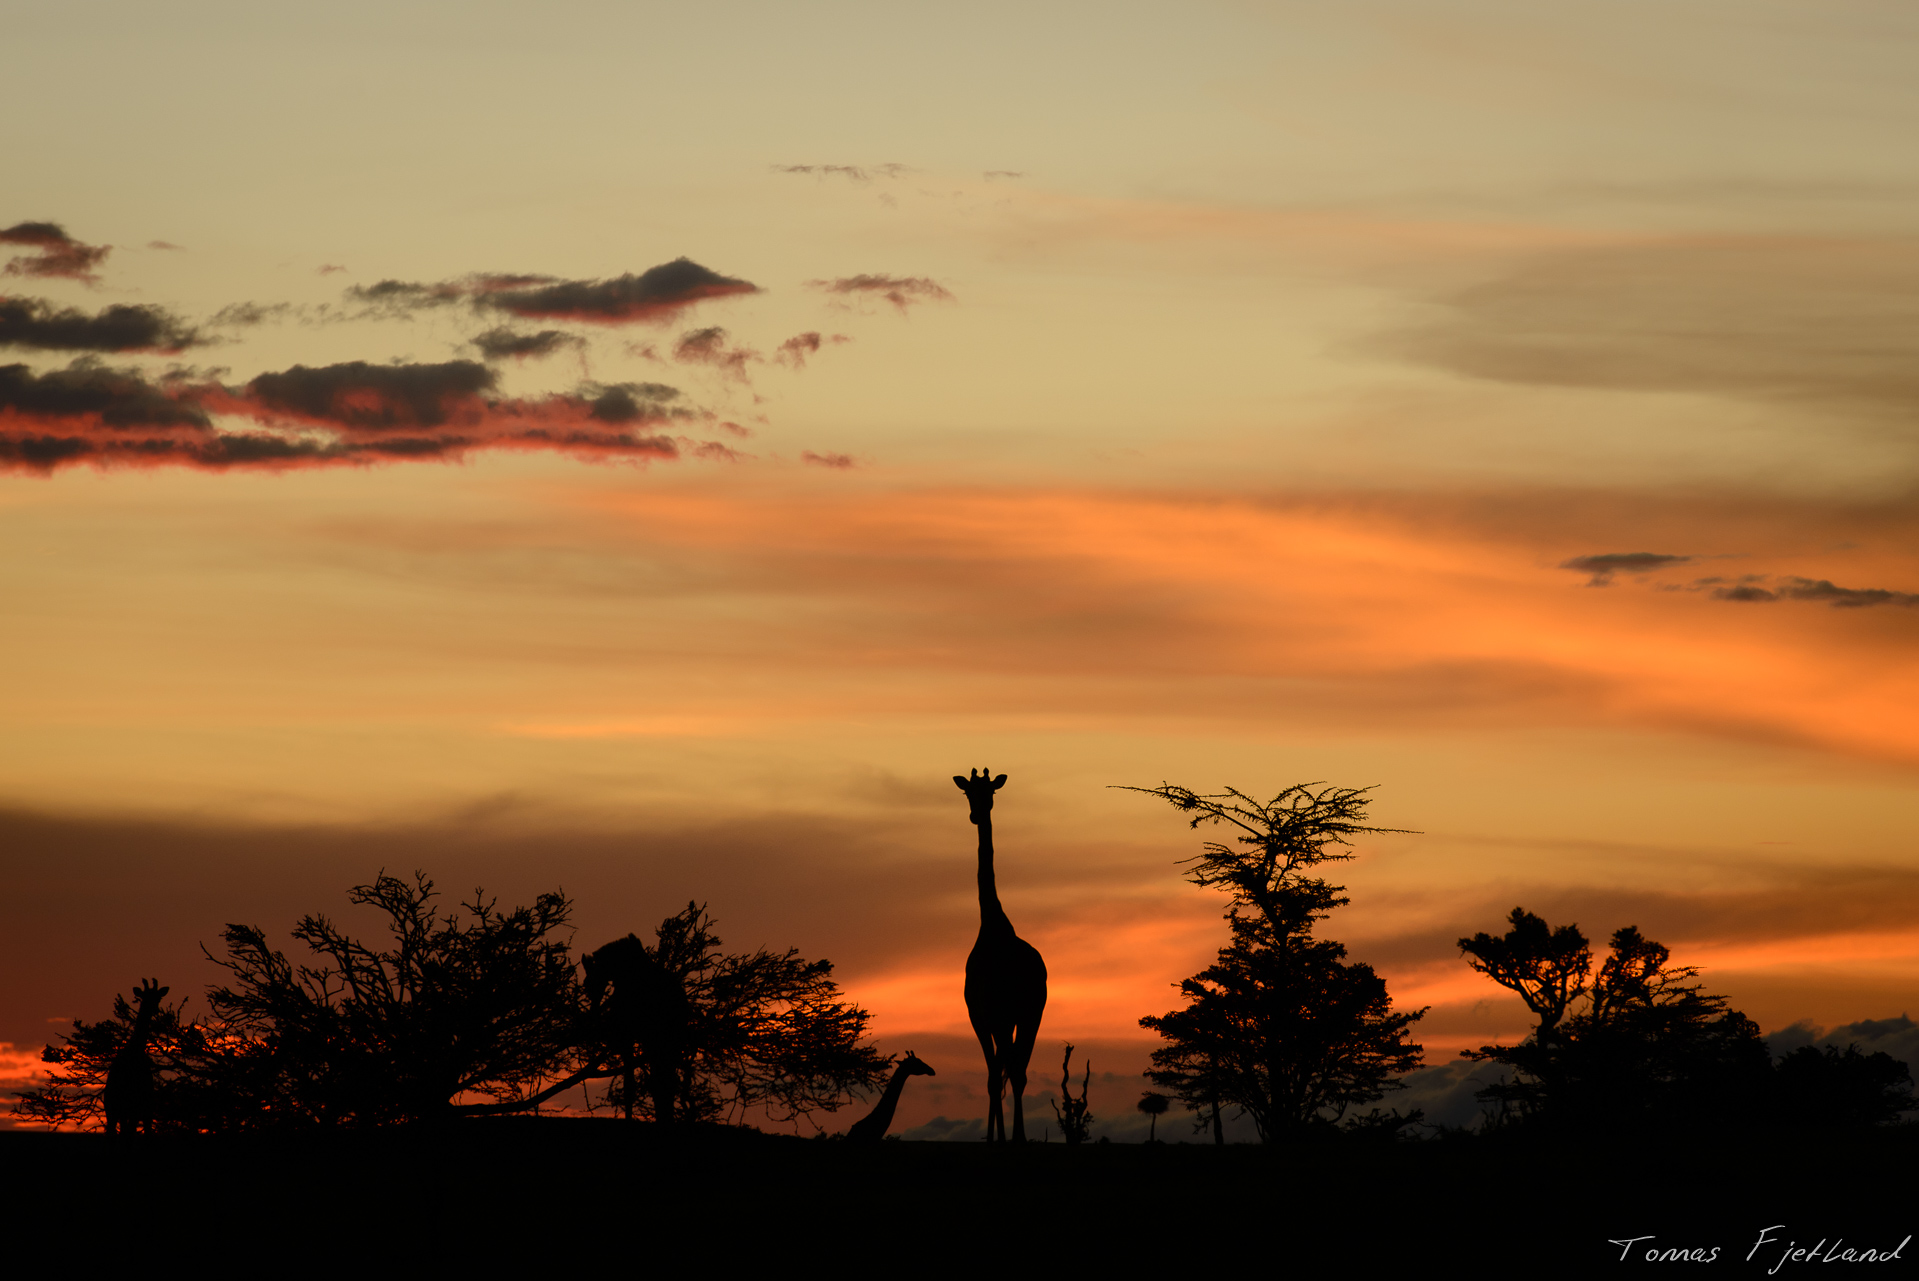 A giraffe in silhouette during sunset over Mara.